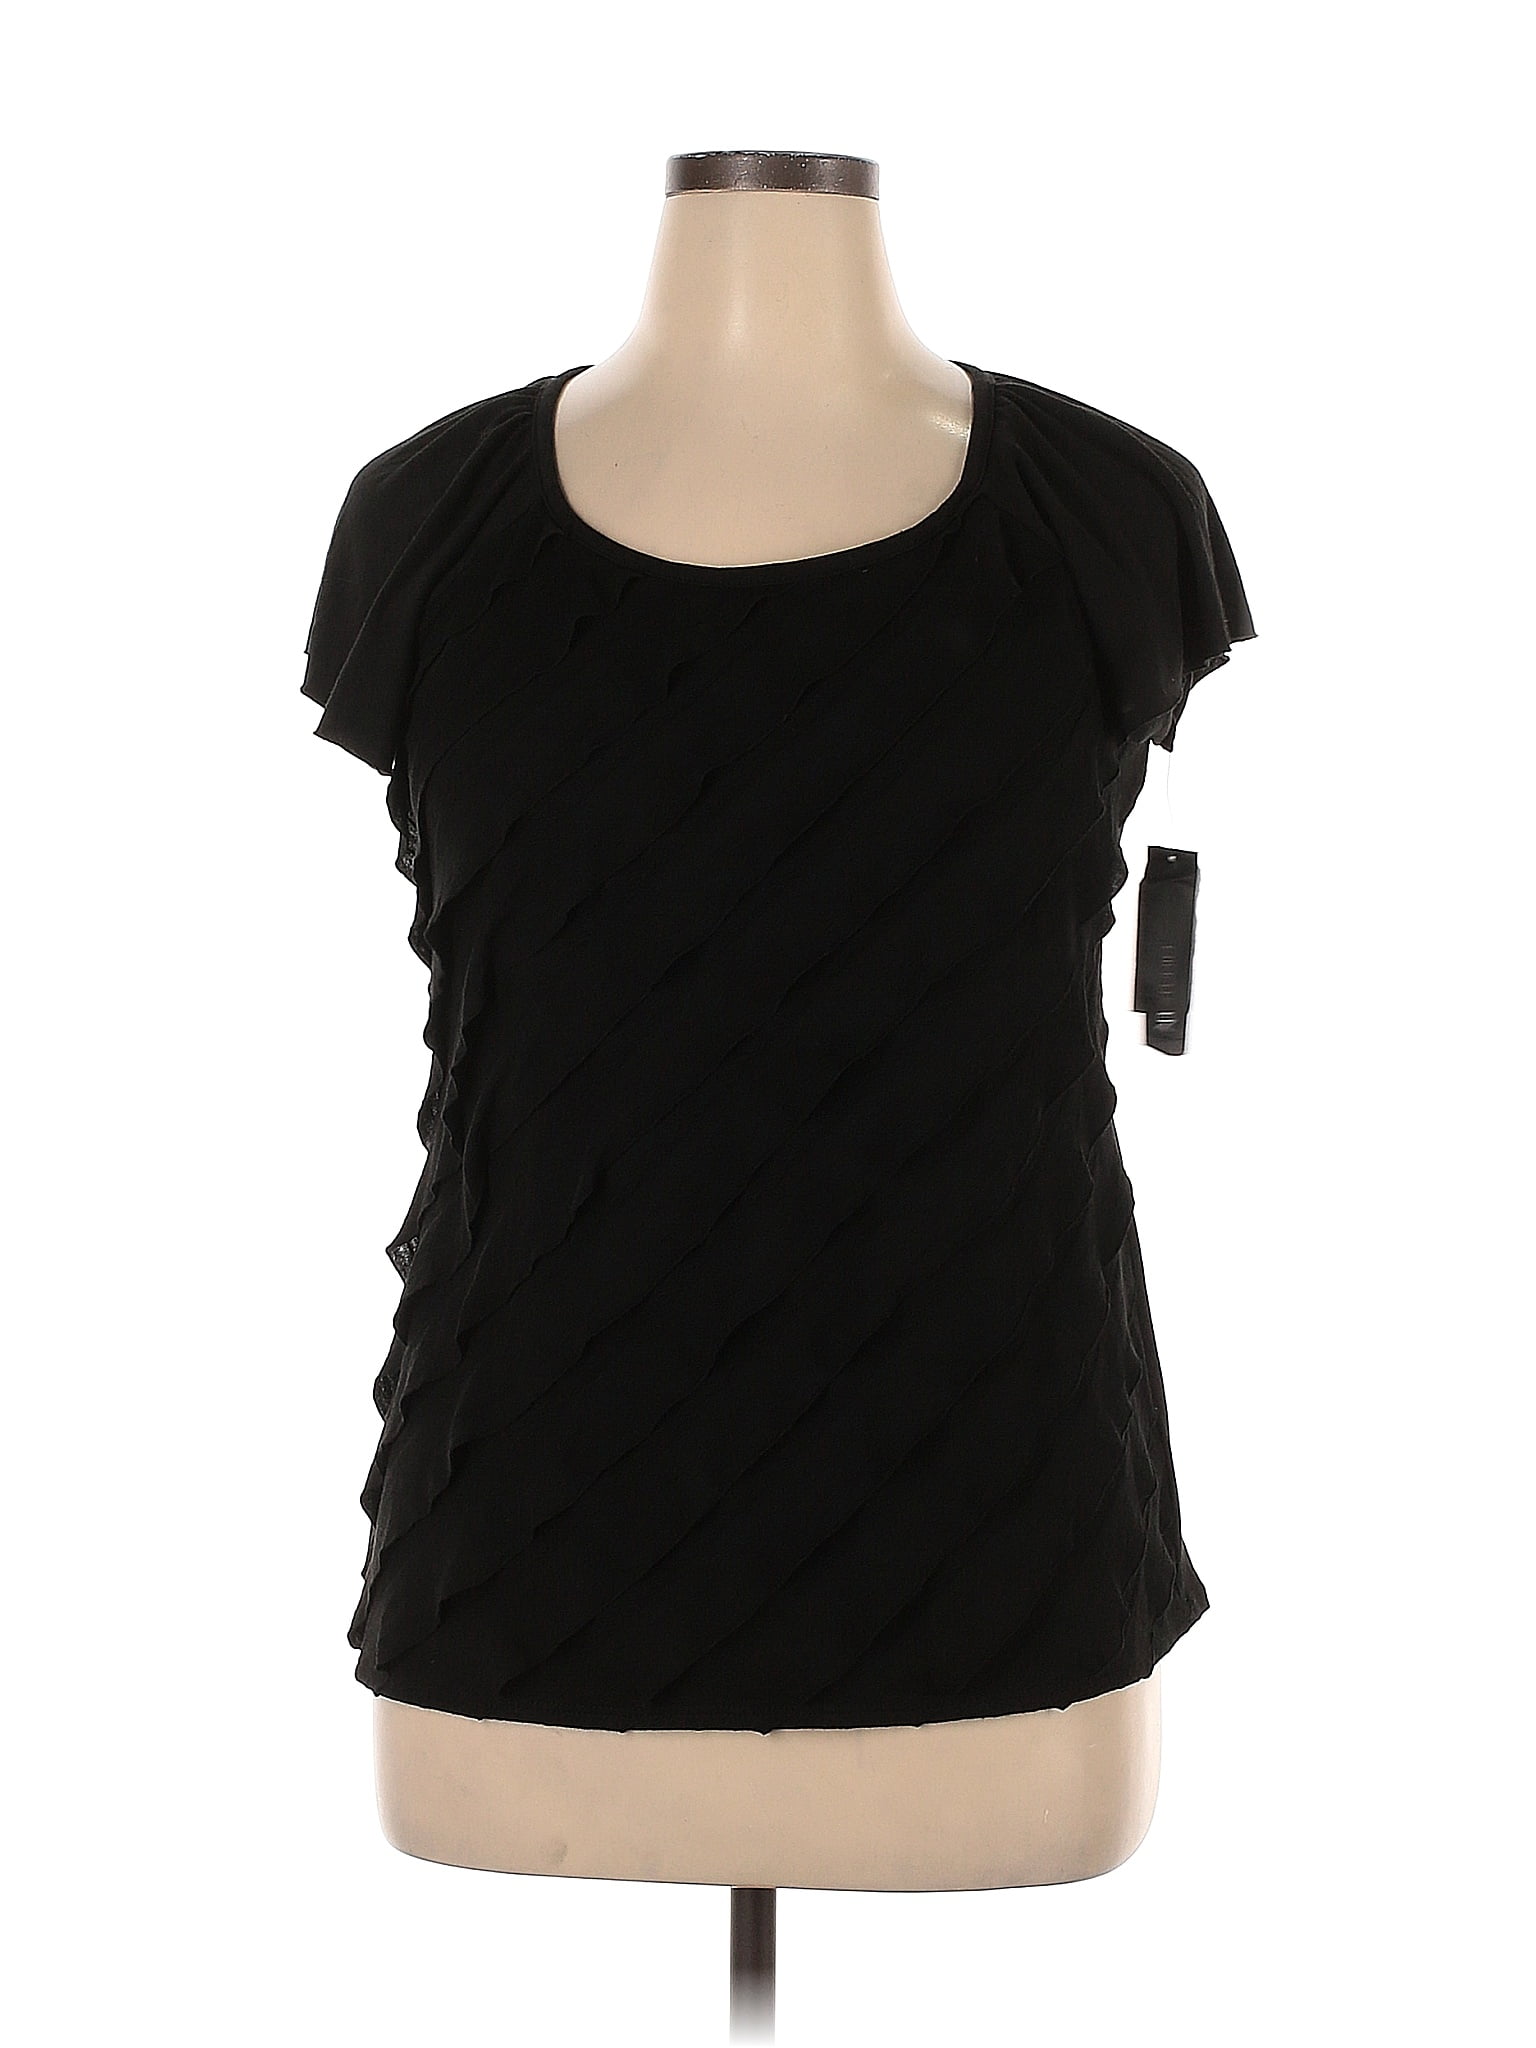 AB Studio Black Short Sleeve Top Size XL - 52% off | thredUP